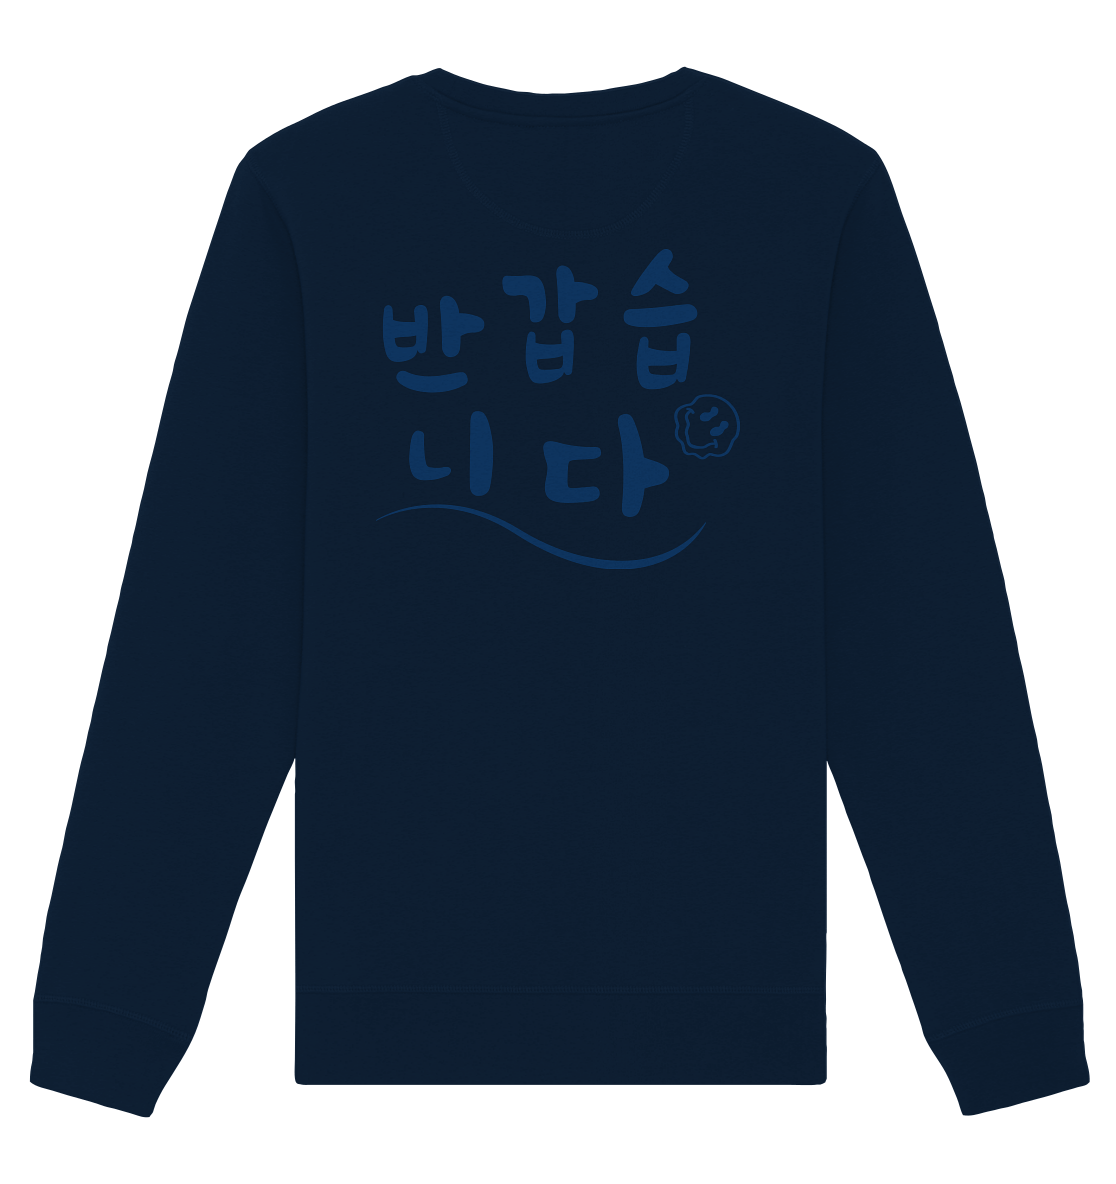 Nice to meet you / 반갑습니다 | Organic Unisex Pullover - Gomawo Korea - Pullover - Südkorea - Korea - Bekleidung - Clothing - K-Streetwear - K-Clothing - K-Vibes